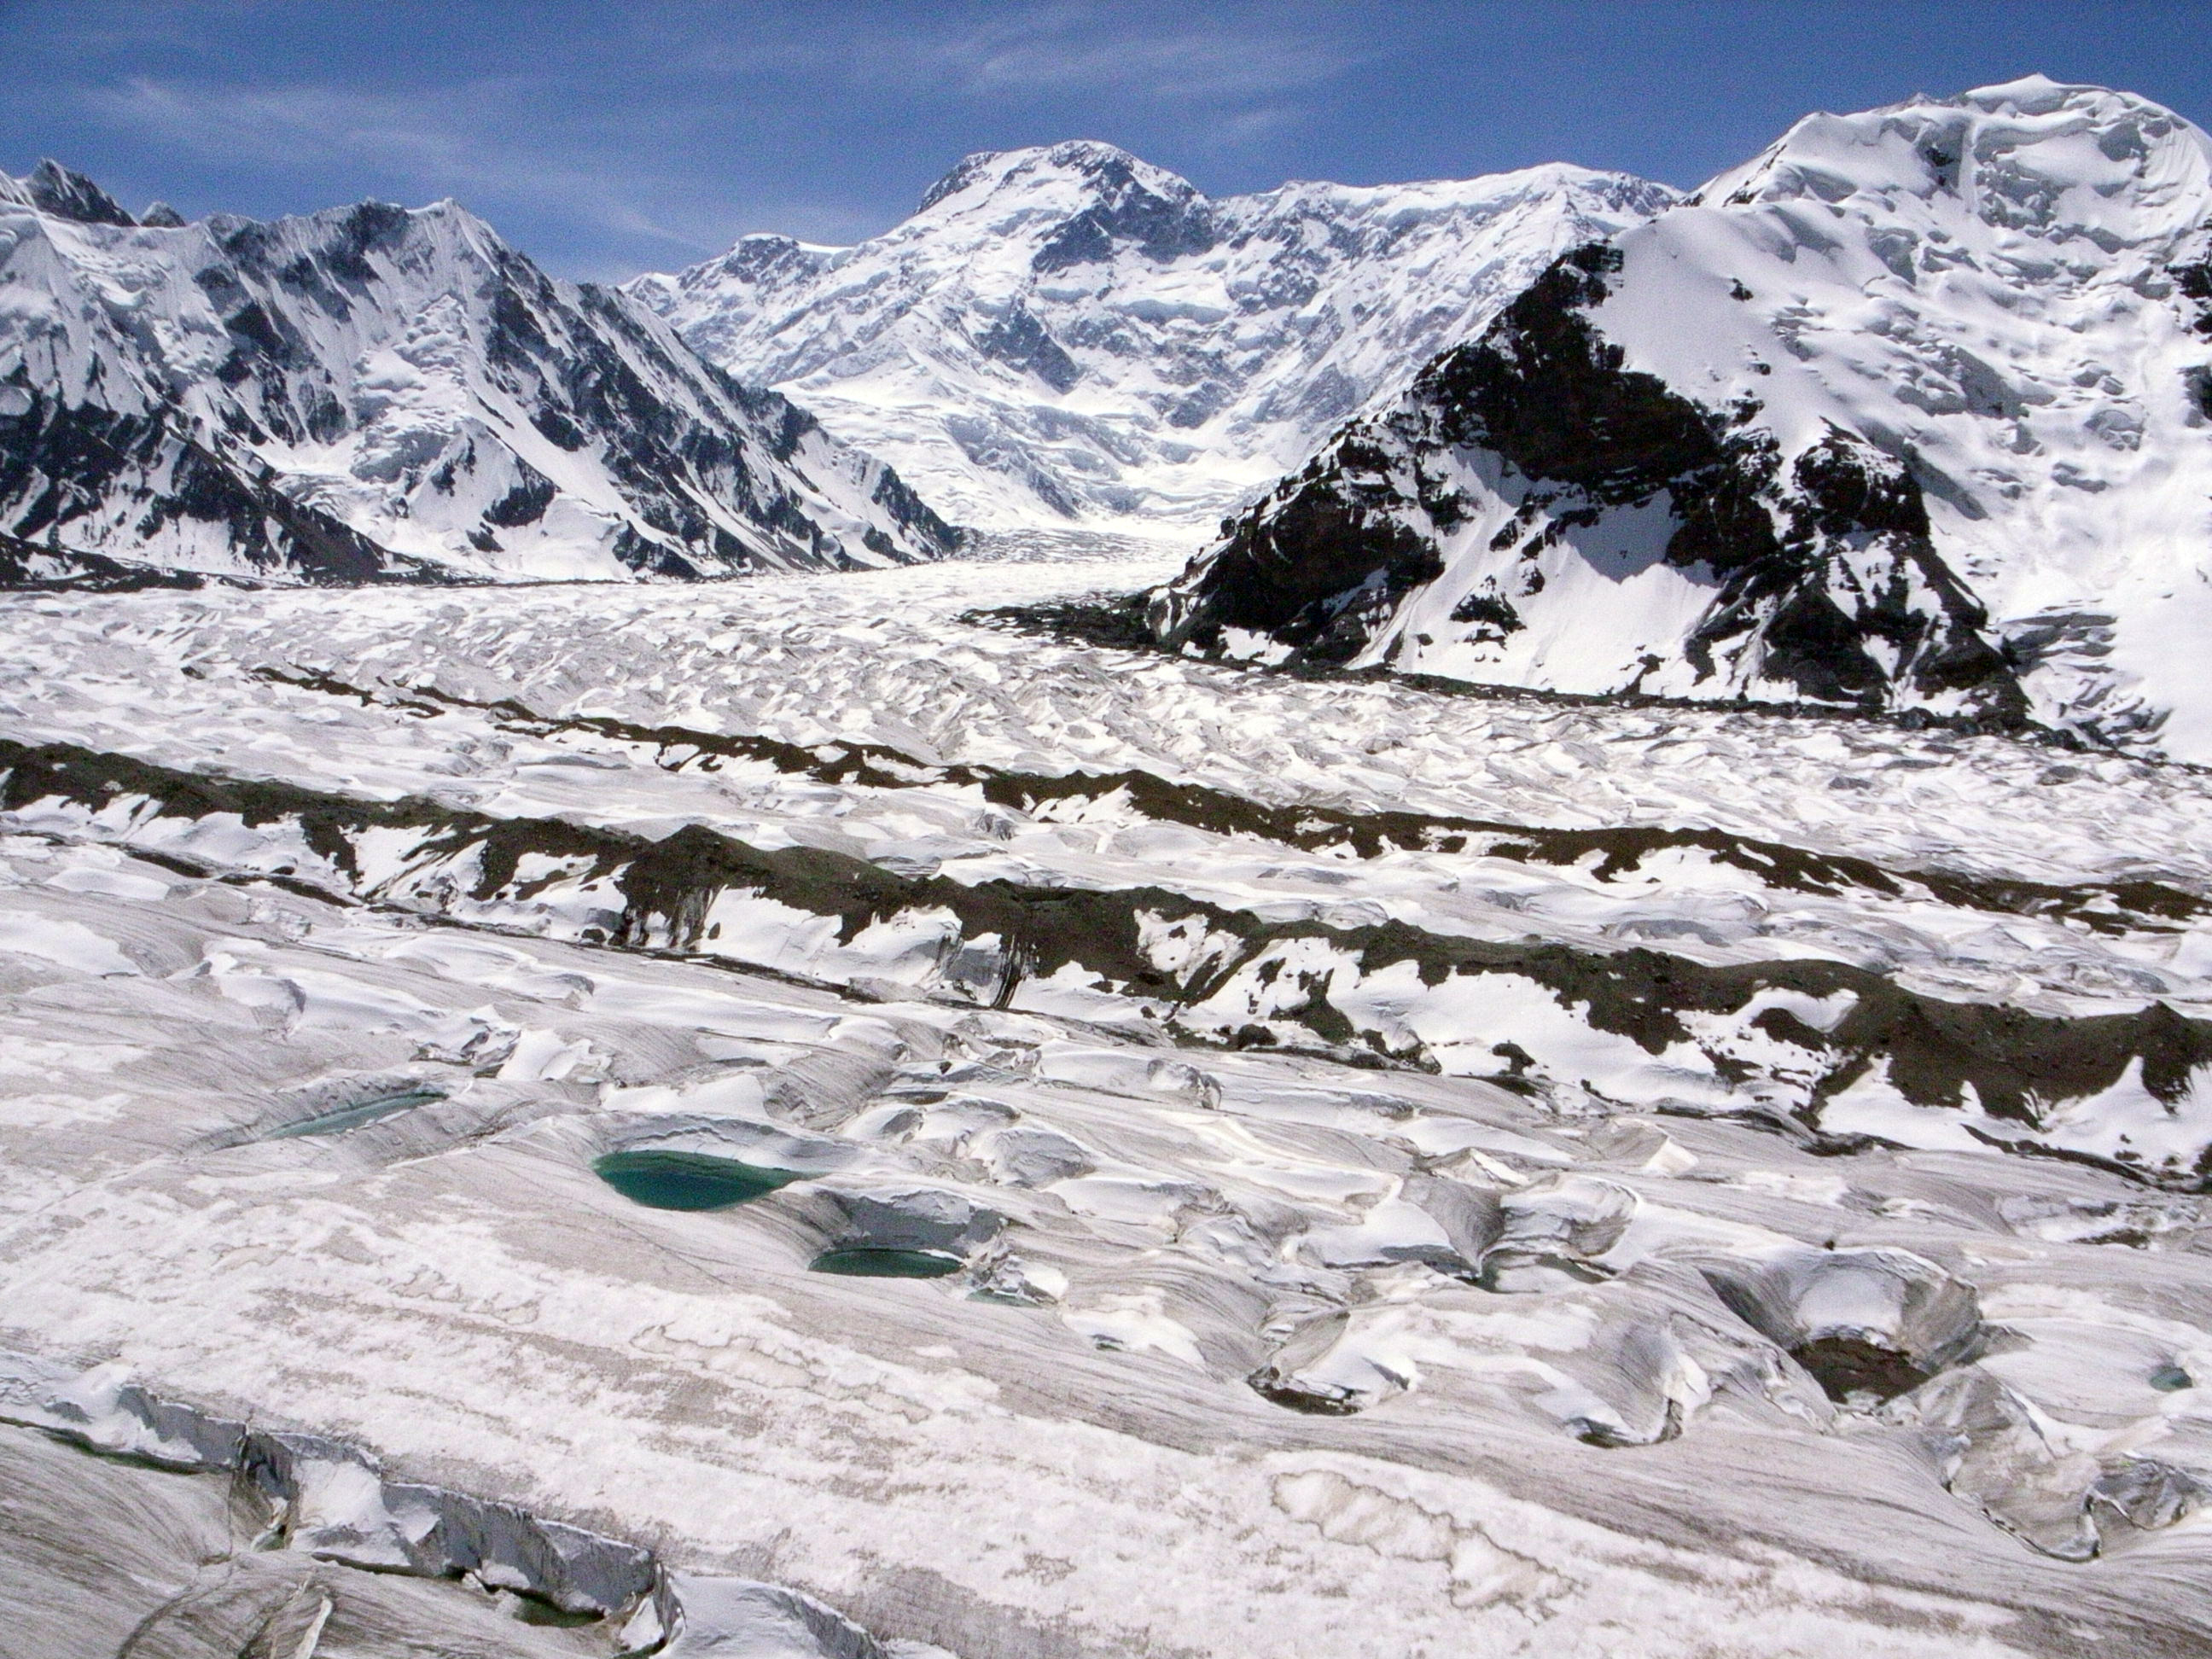 File:冰川和雪山 glacier and snow mountain (4121518551).jpg